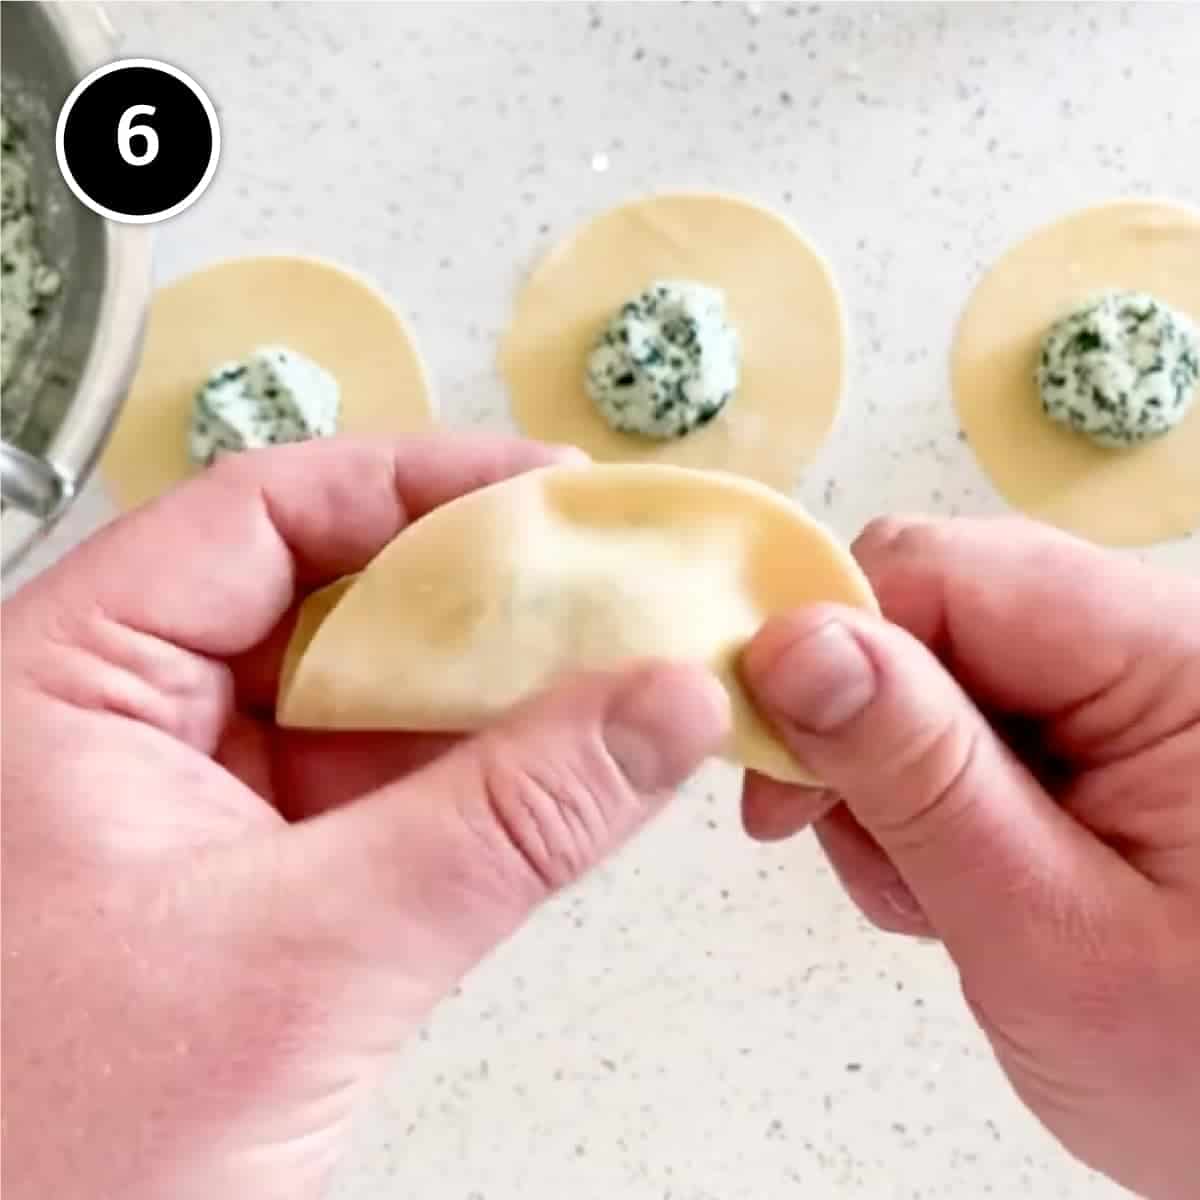 Folding a disc of pasta into a half moon shape.